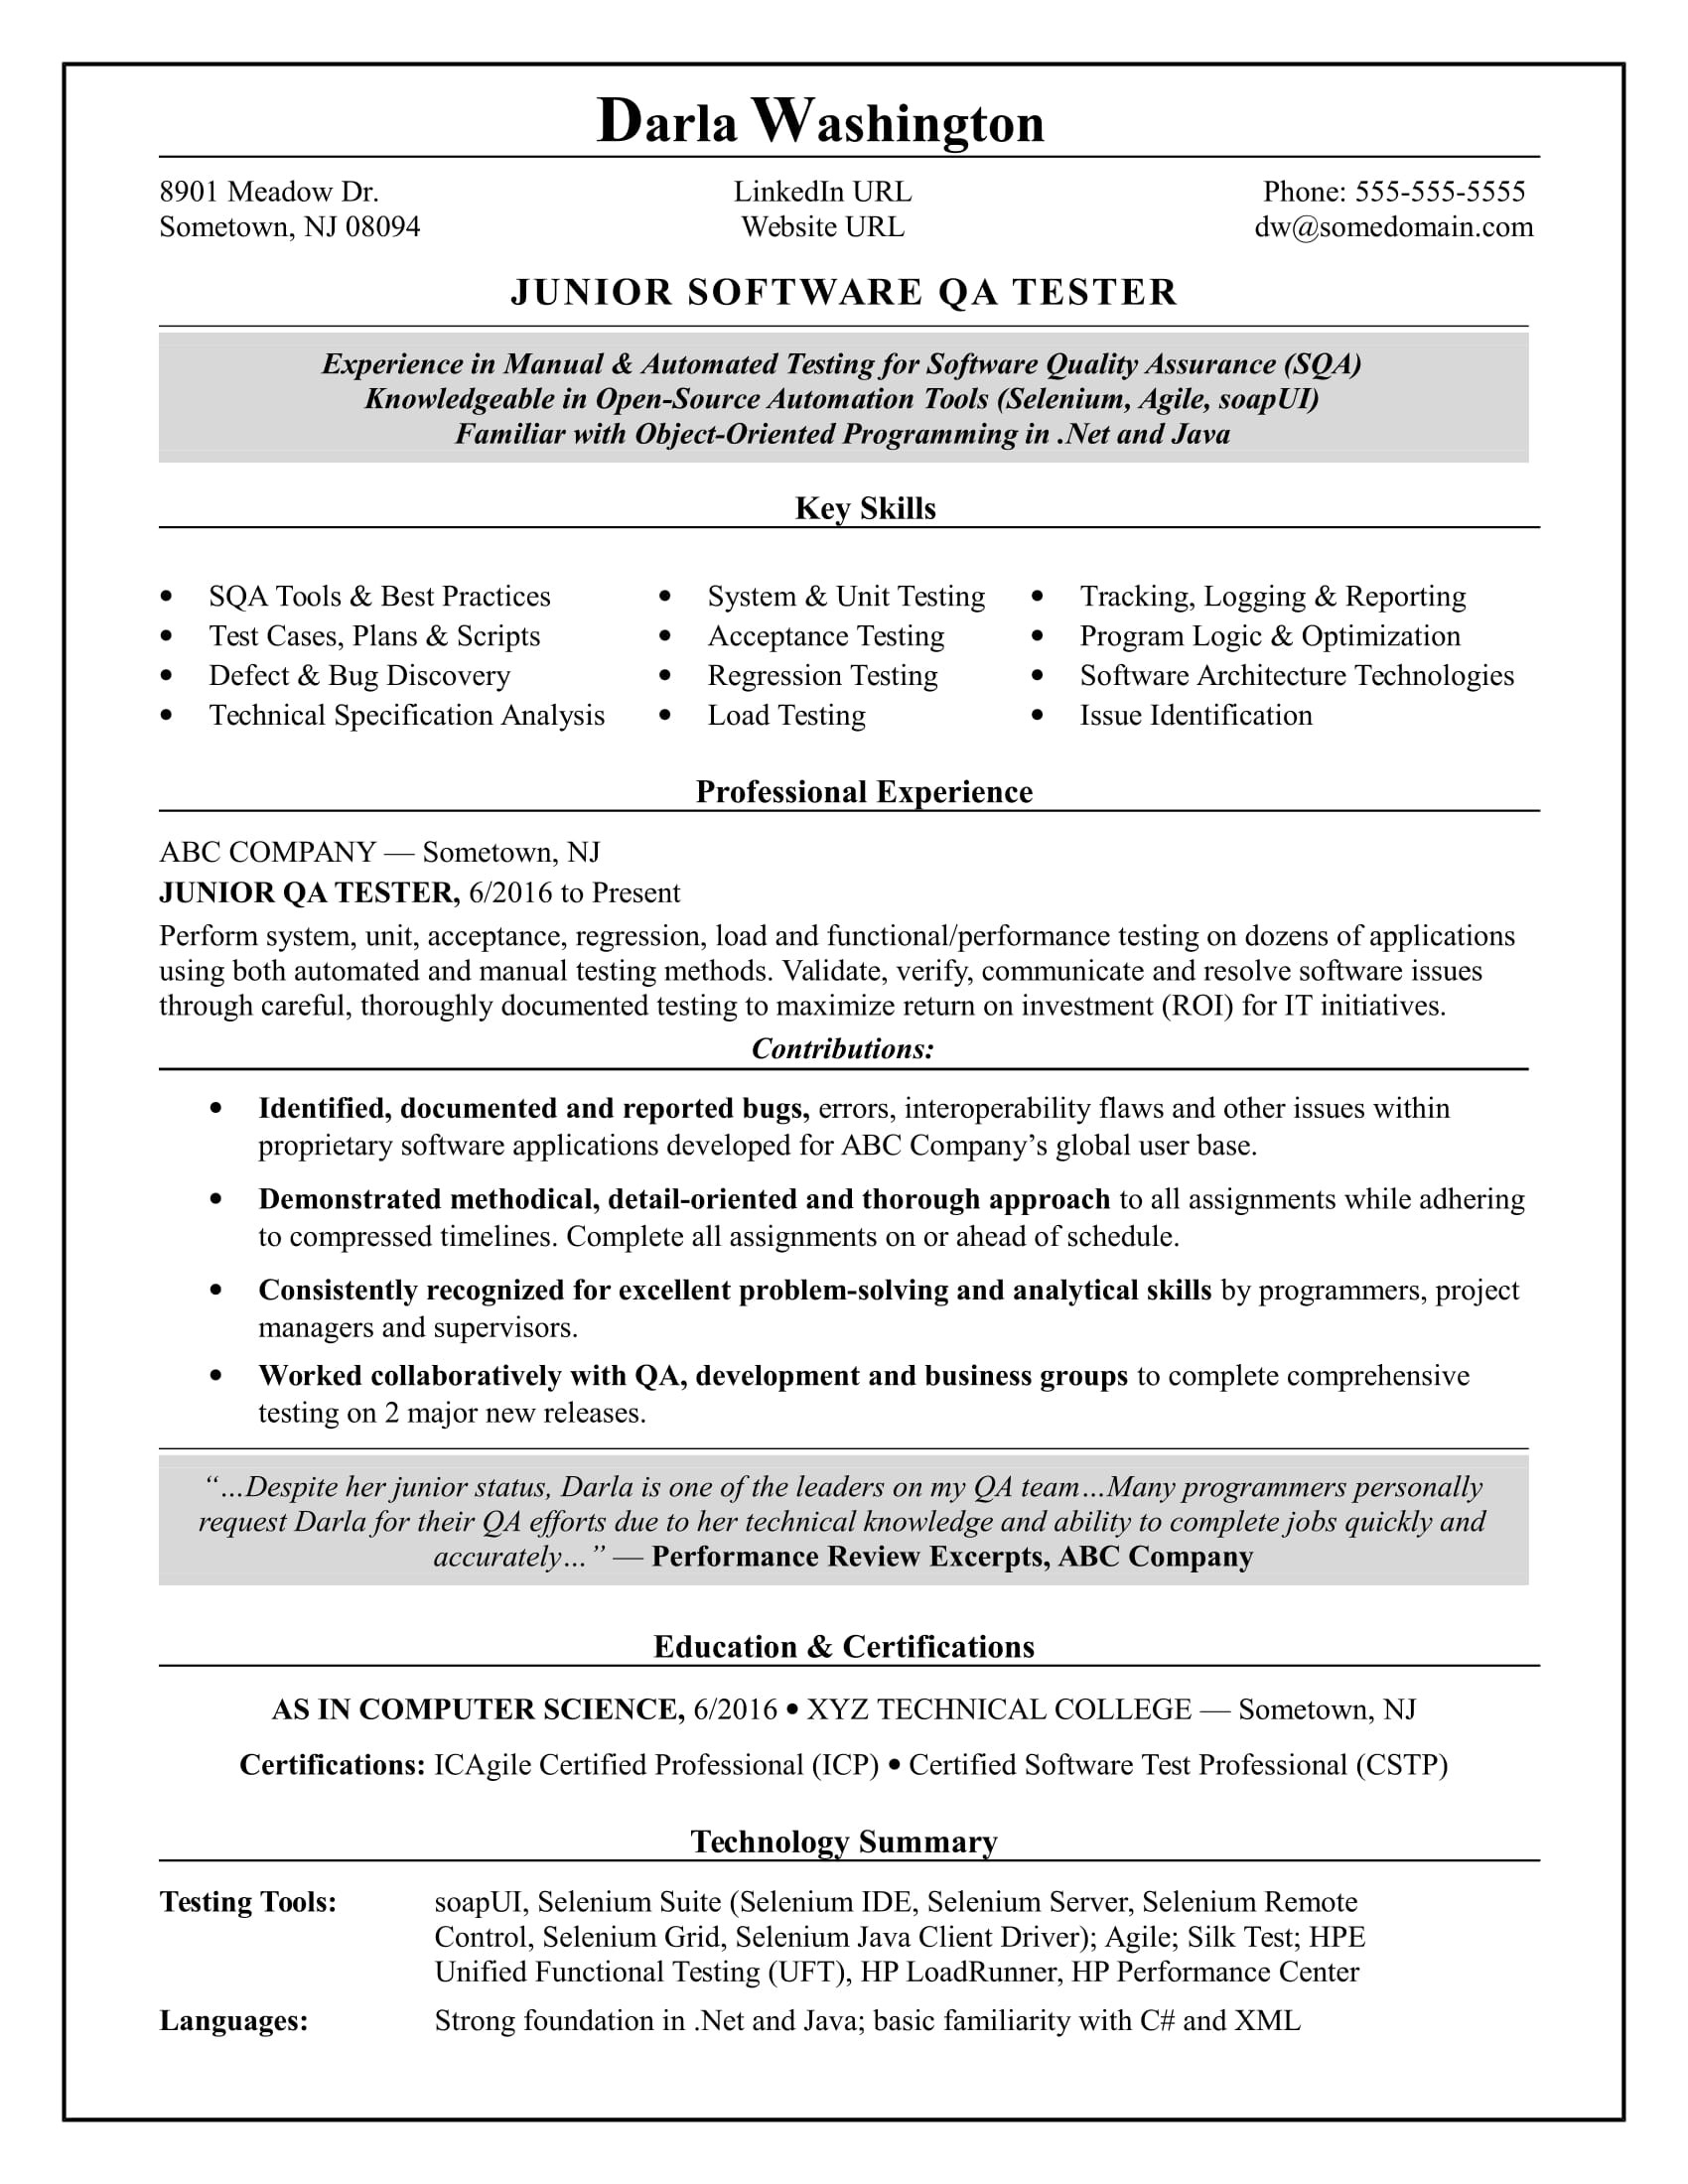 Sample Resume for Selenium Automation Tester Experienced Entry-level Qa software Tester Resume Sample Monster.com